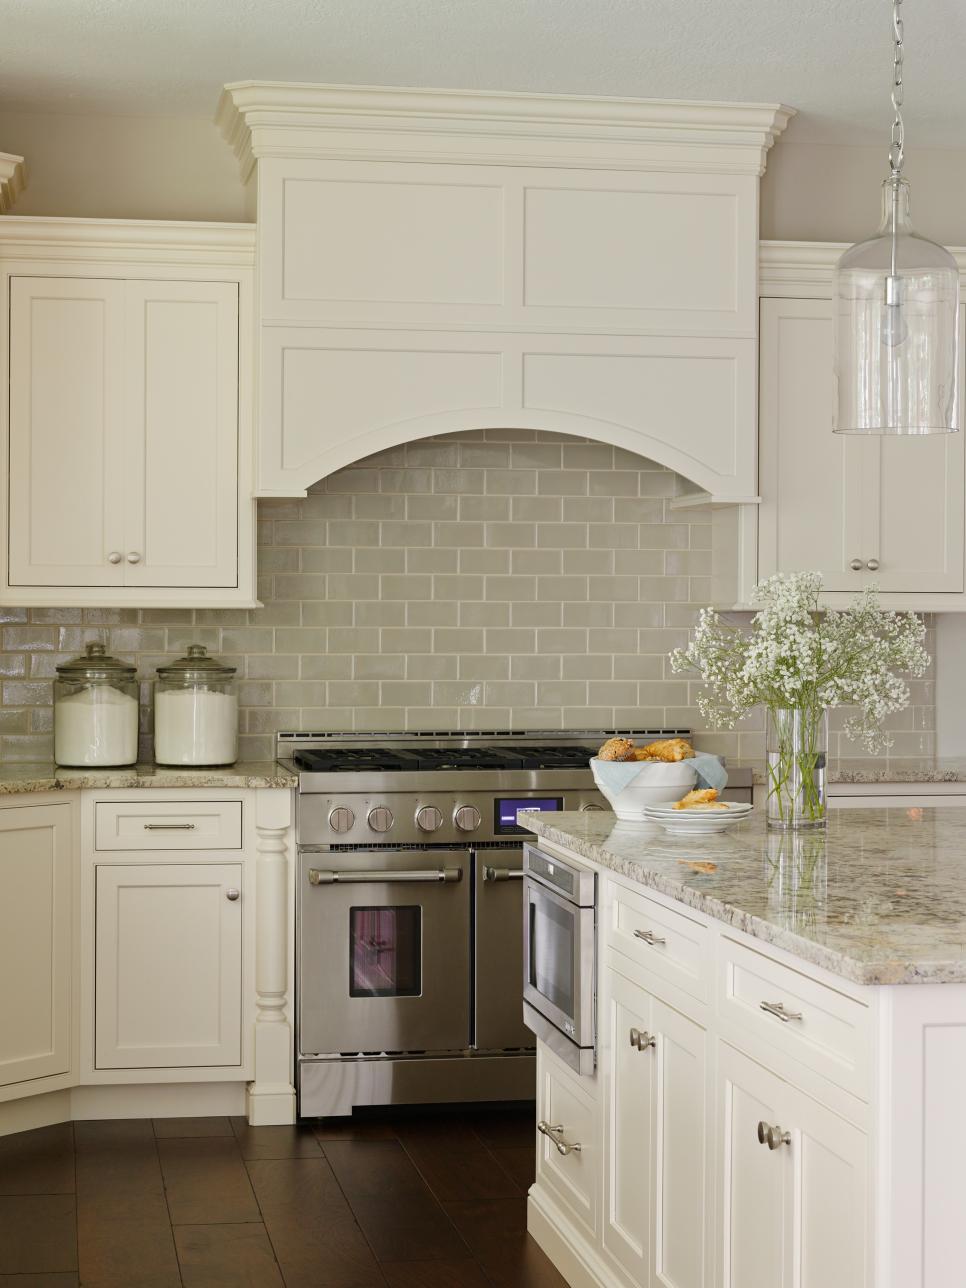 Kitchen With White and Neutral Tile Backsplash HGTV